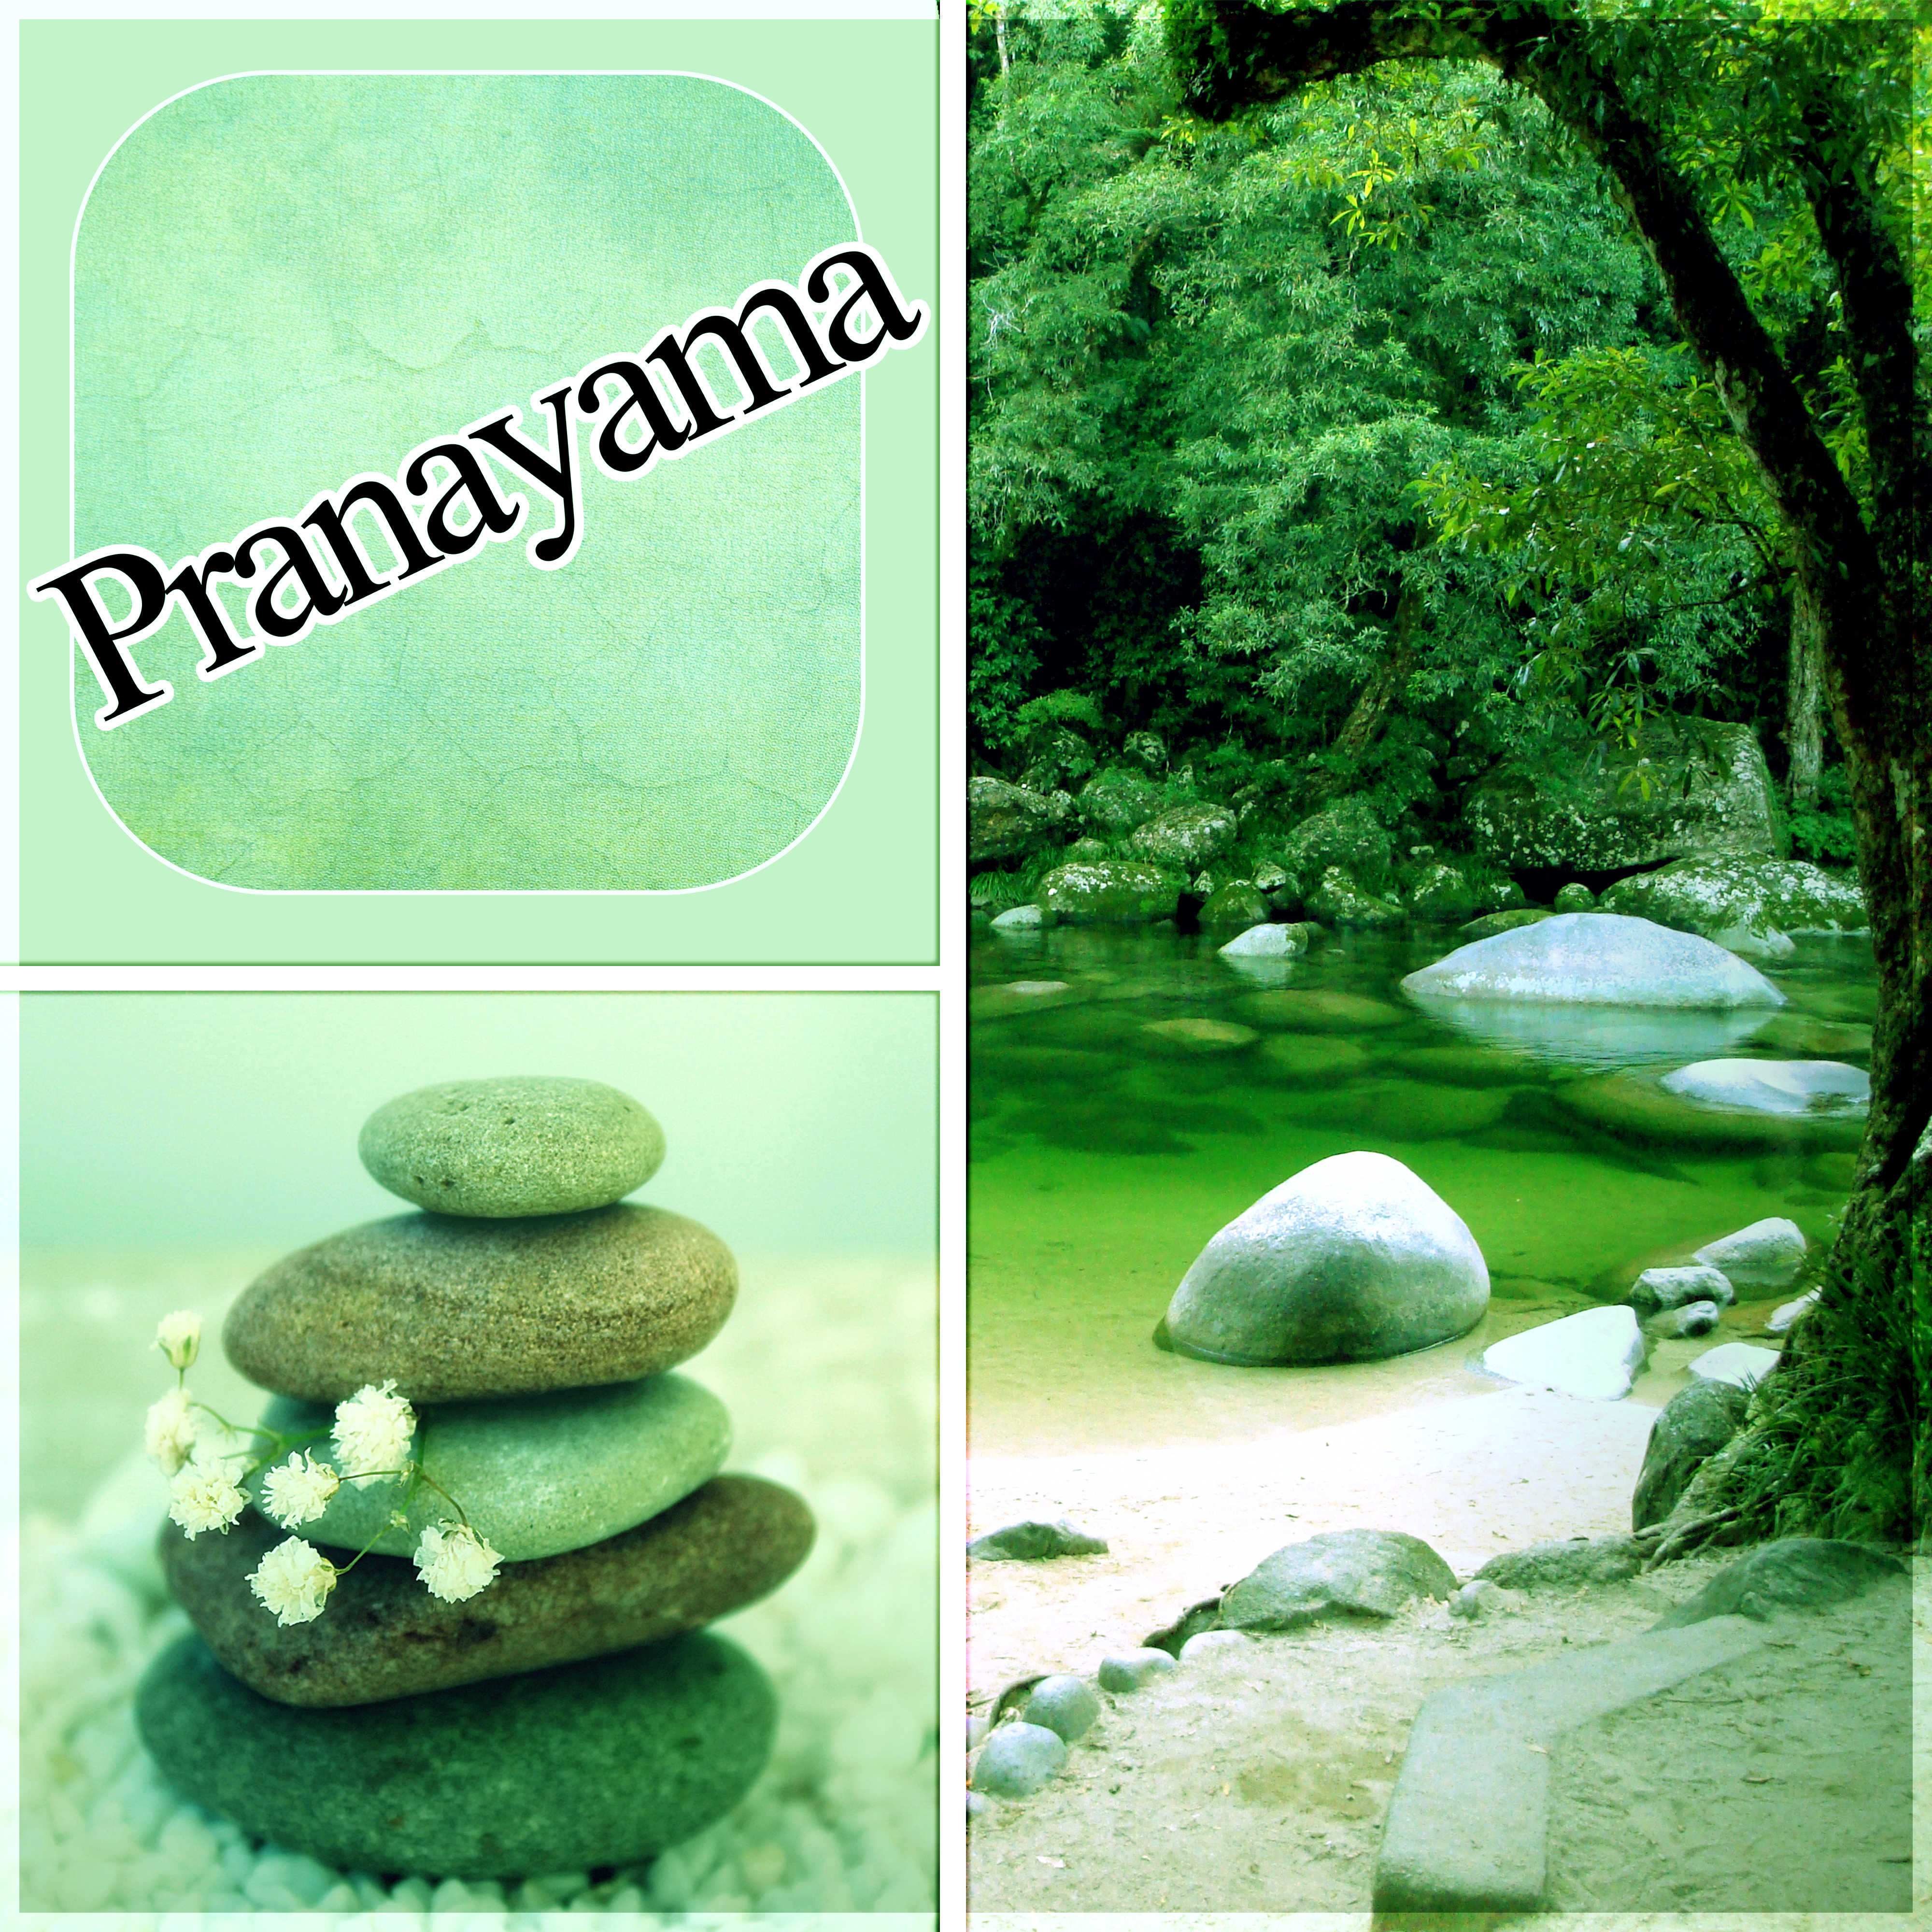 Pranayama - Hindu Yoga, Mindfulness Meditation & Relaxation with Flute Music and Nature Sounds, Inspiring Piano Music